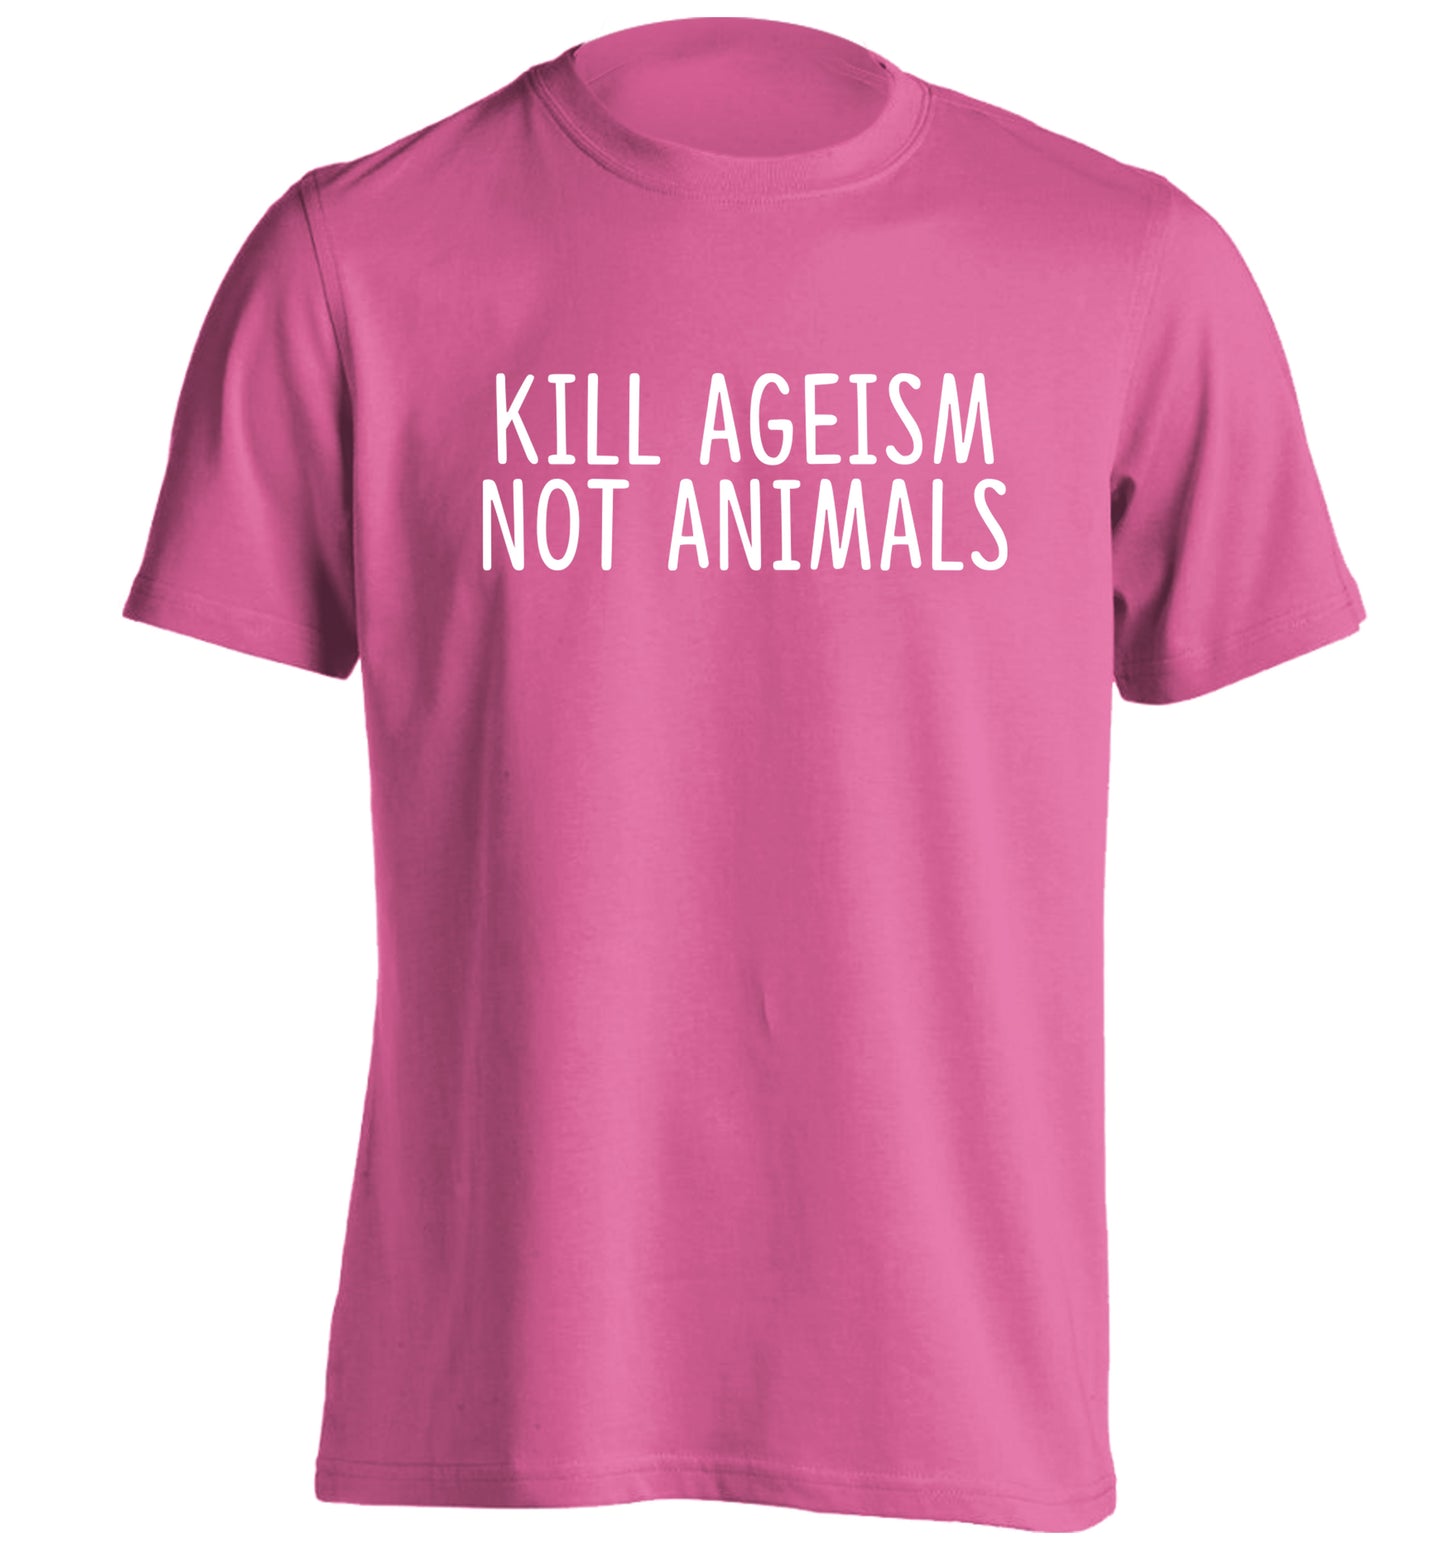 Kill Ageism Not Animals adults unisex pink Tshirt 2XL